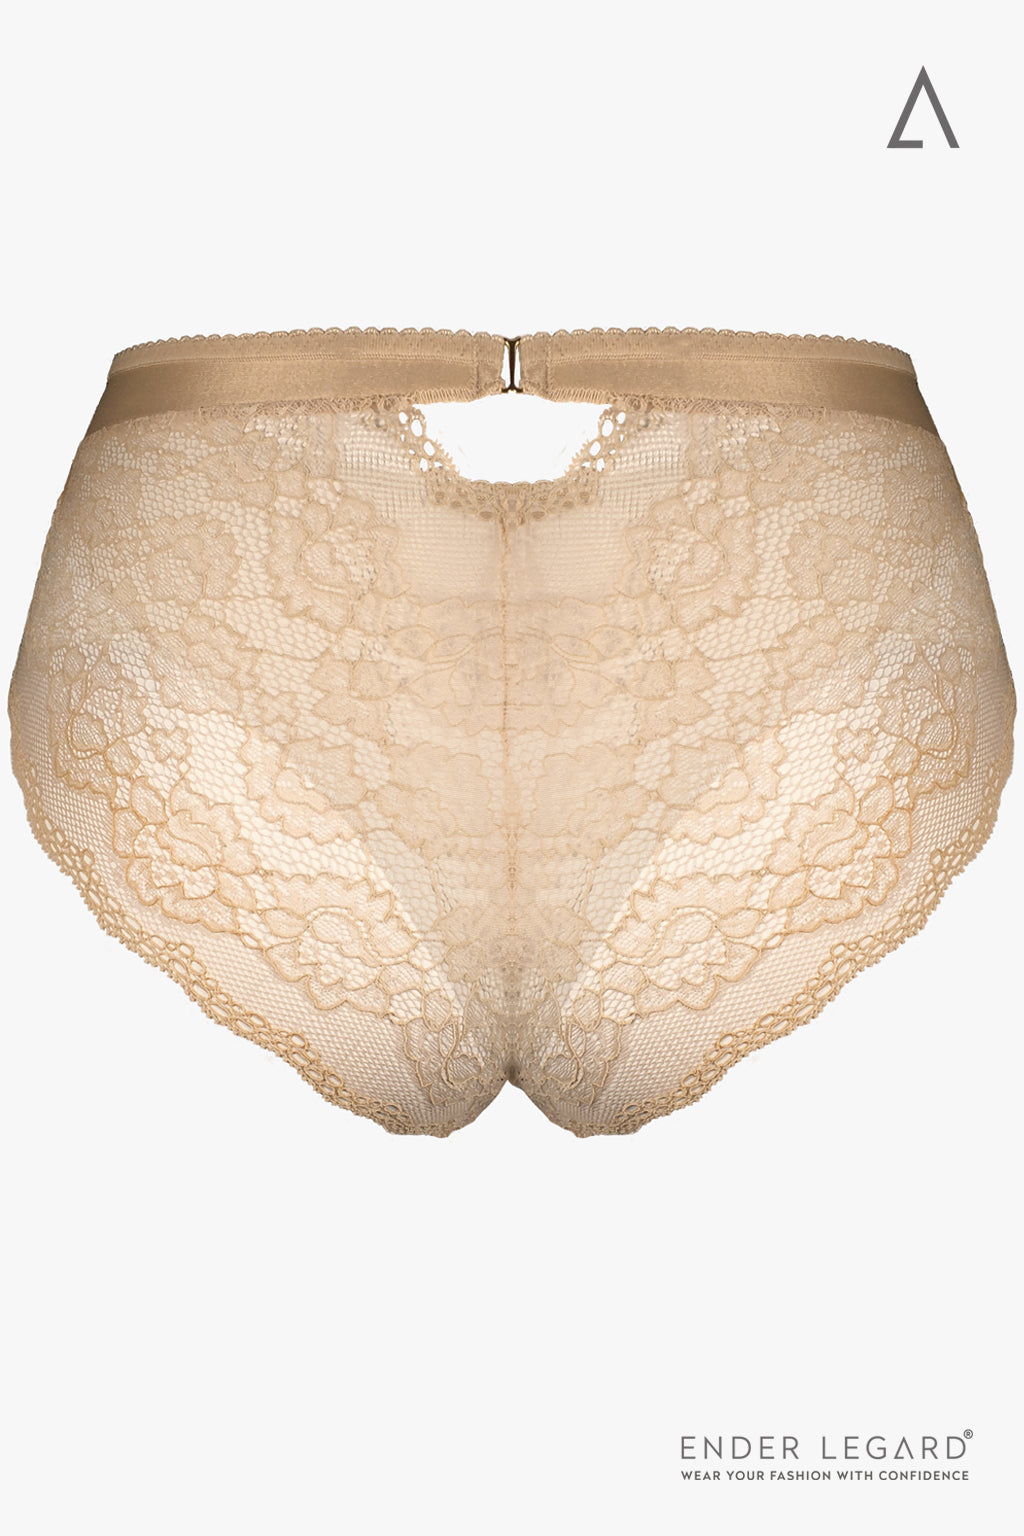 Lace panties briefs for beige bodysuit shaper | ENDER LEGARD